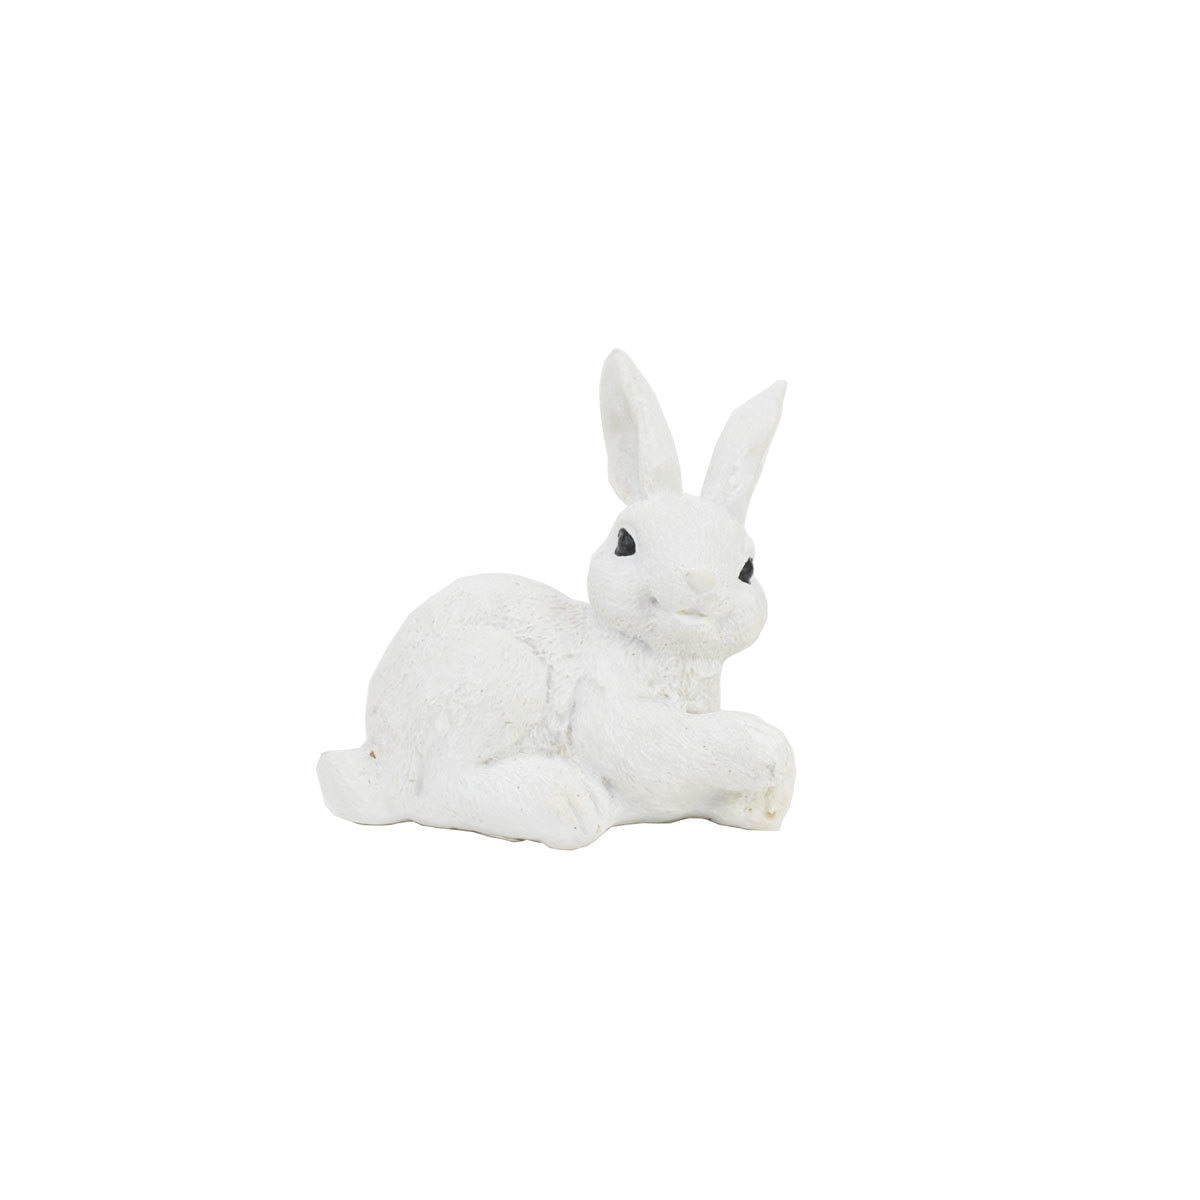 Resin rabbit, white rabbit, sitting right, rabbit, ornament, rabbit, Handmade items, interior, miscellaneous goods, ornament, object